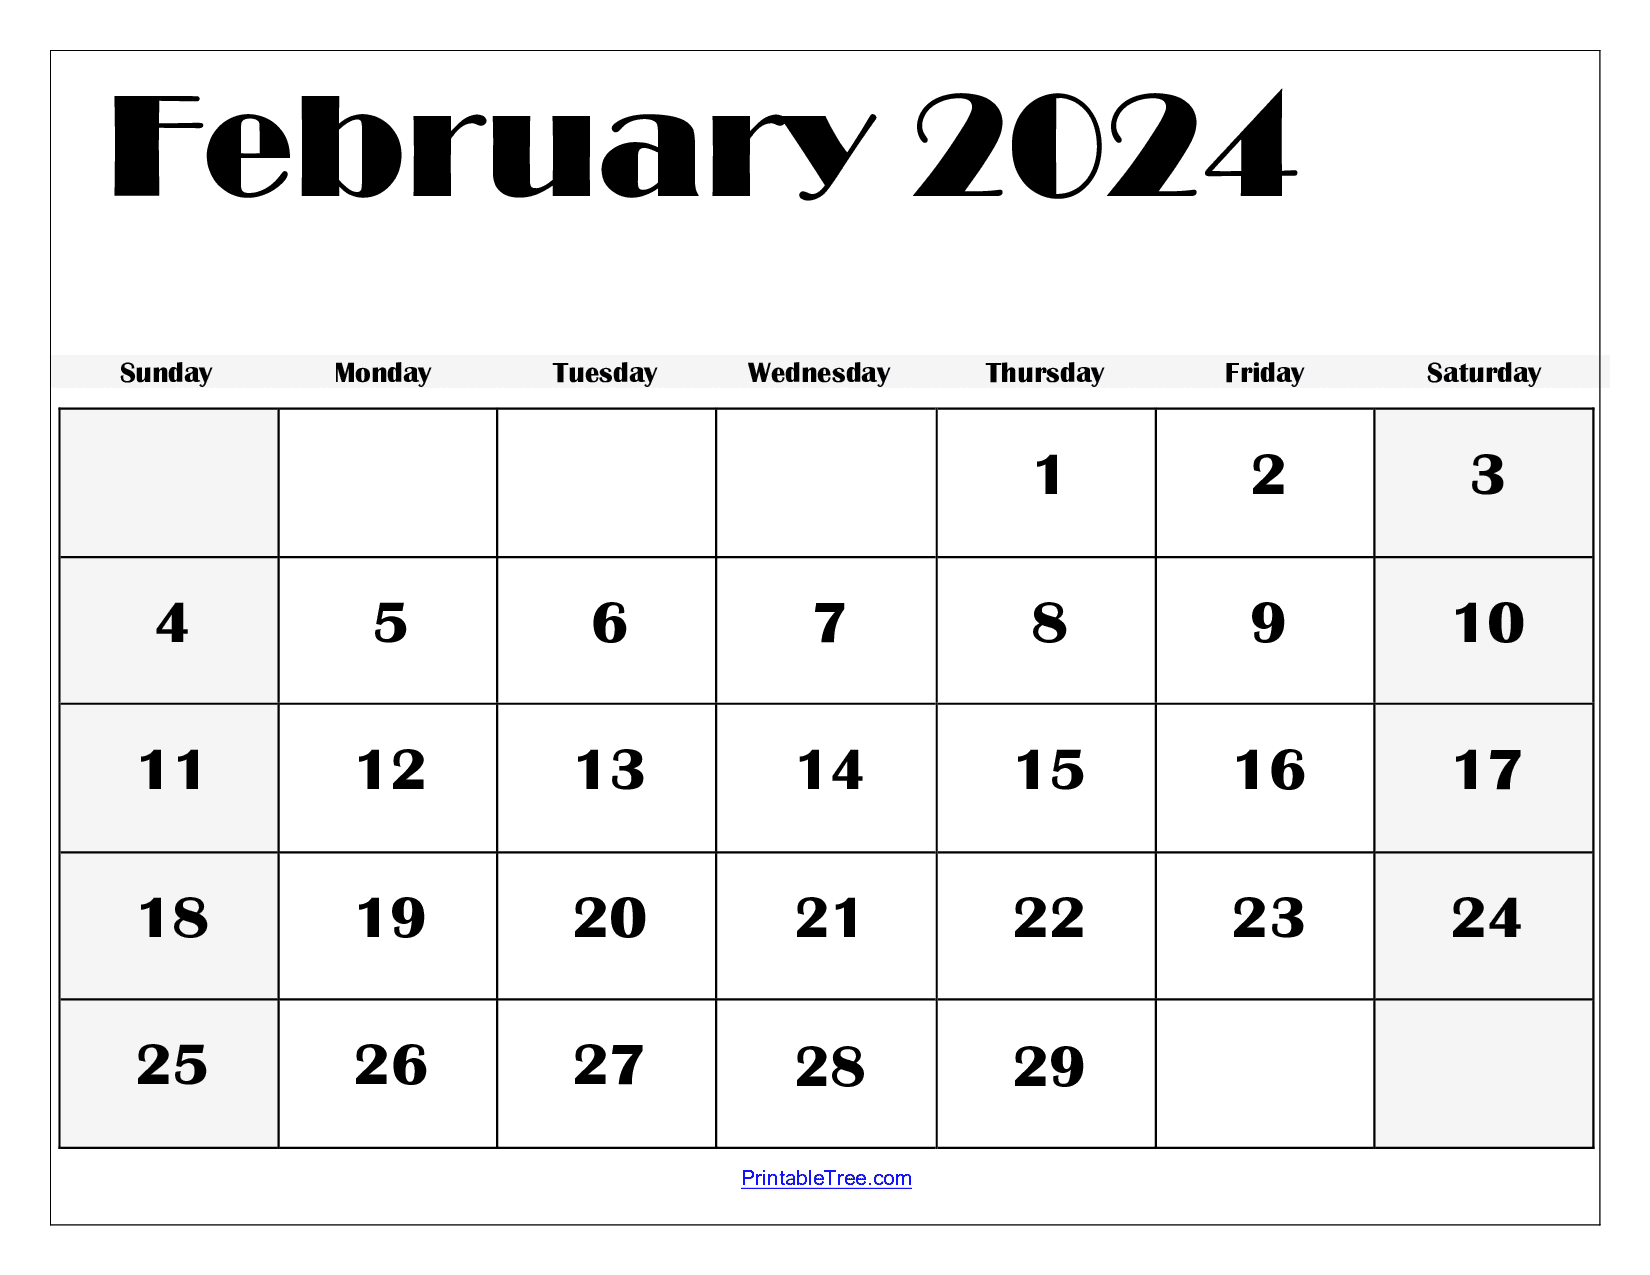 February 2024 Calendar Printable Pdf Template With Holidays for Free February Printable Calendar 2024